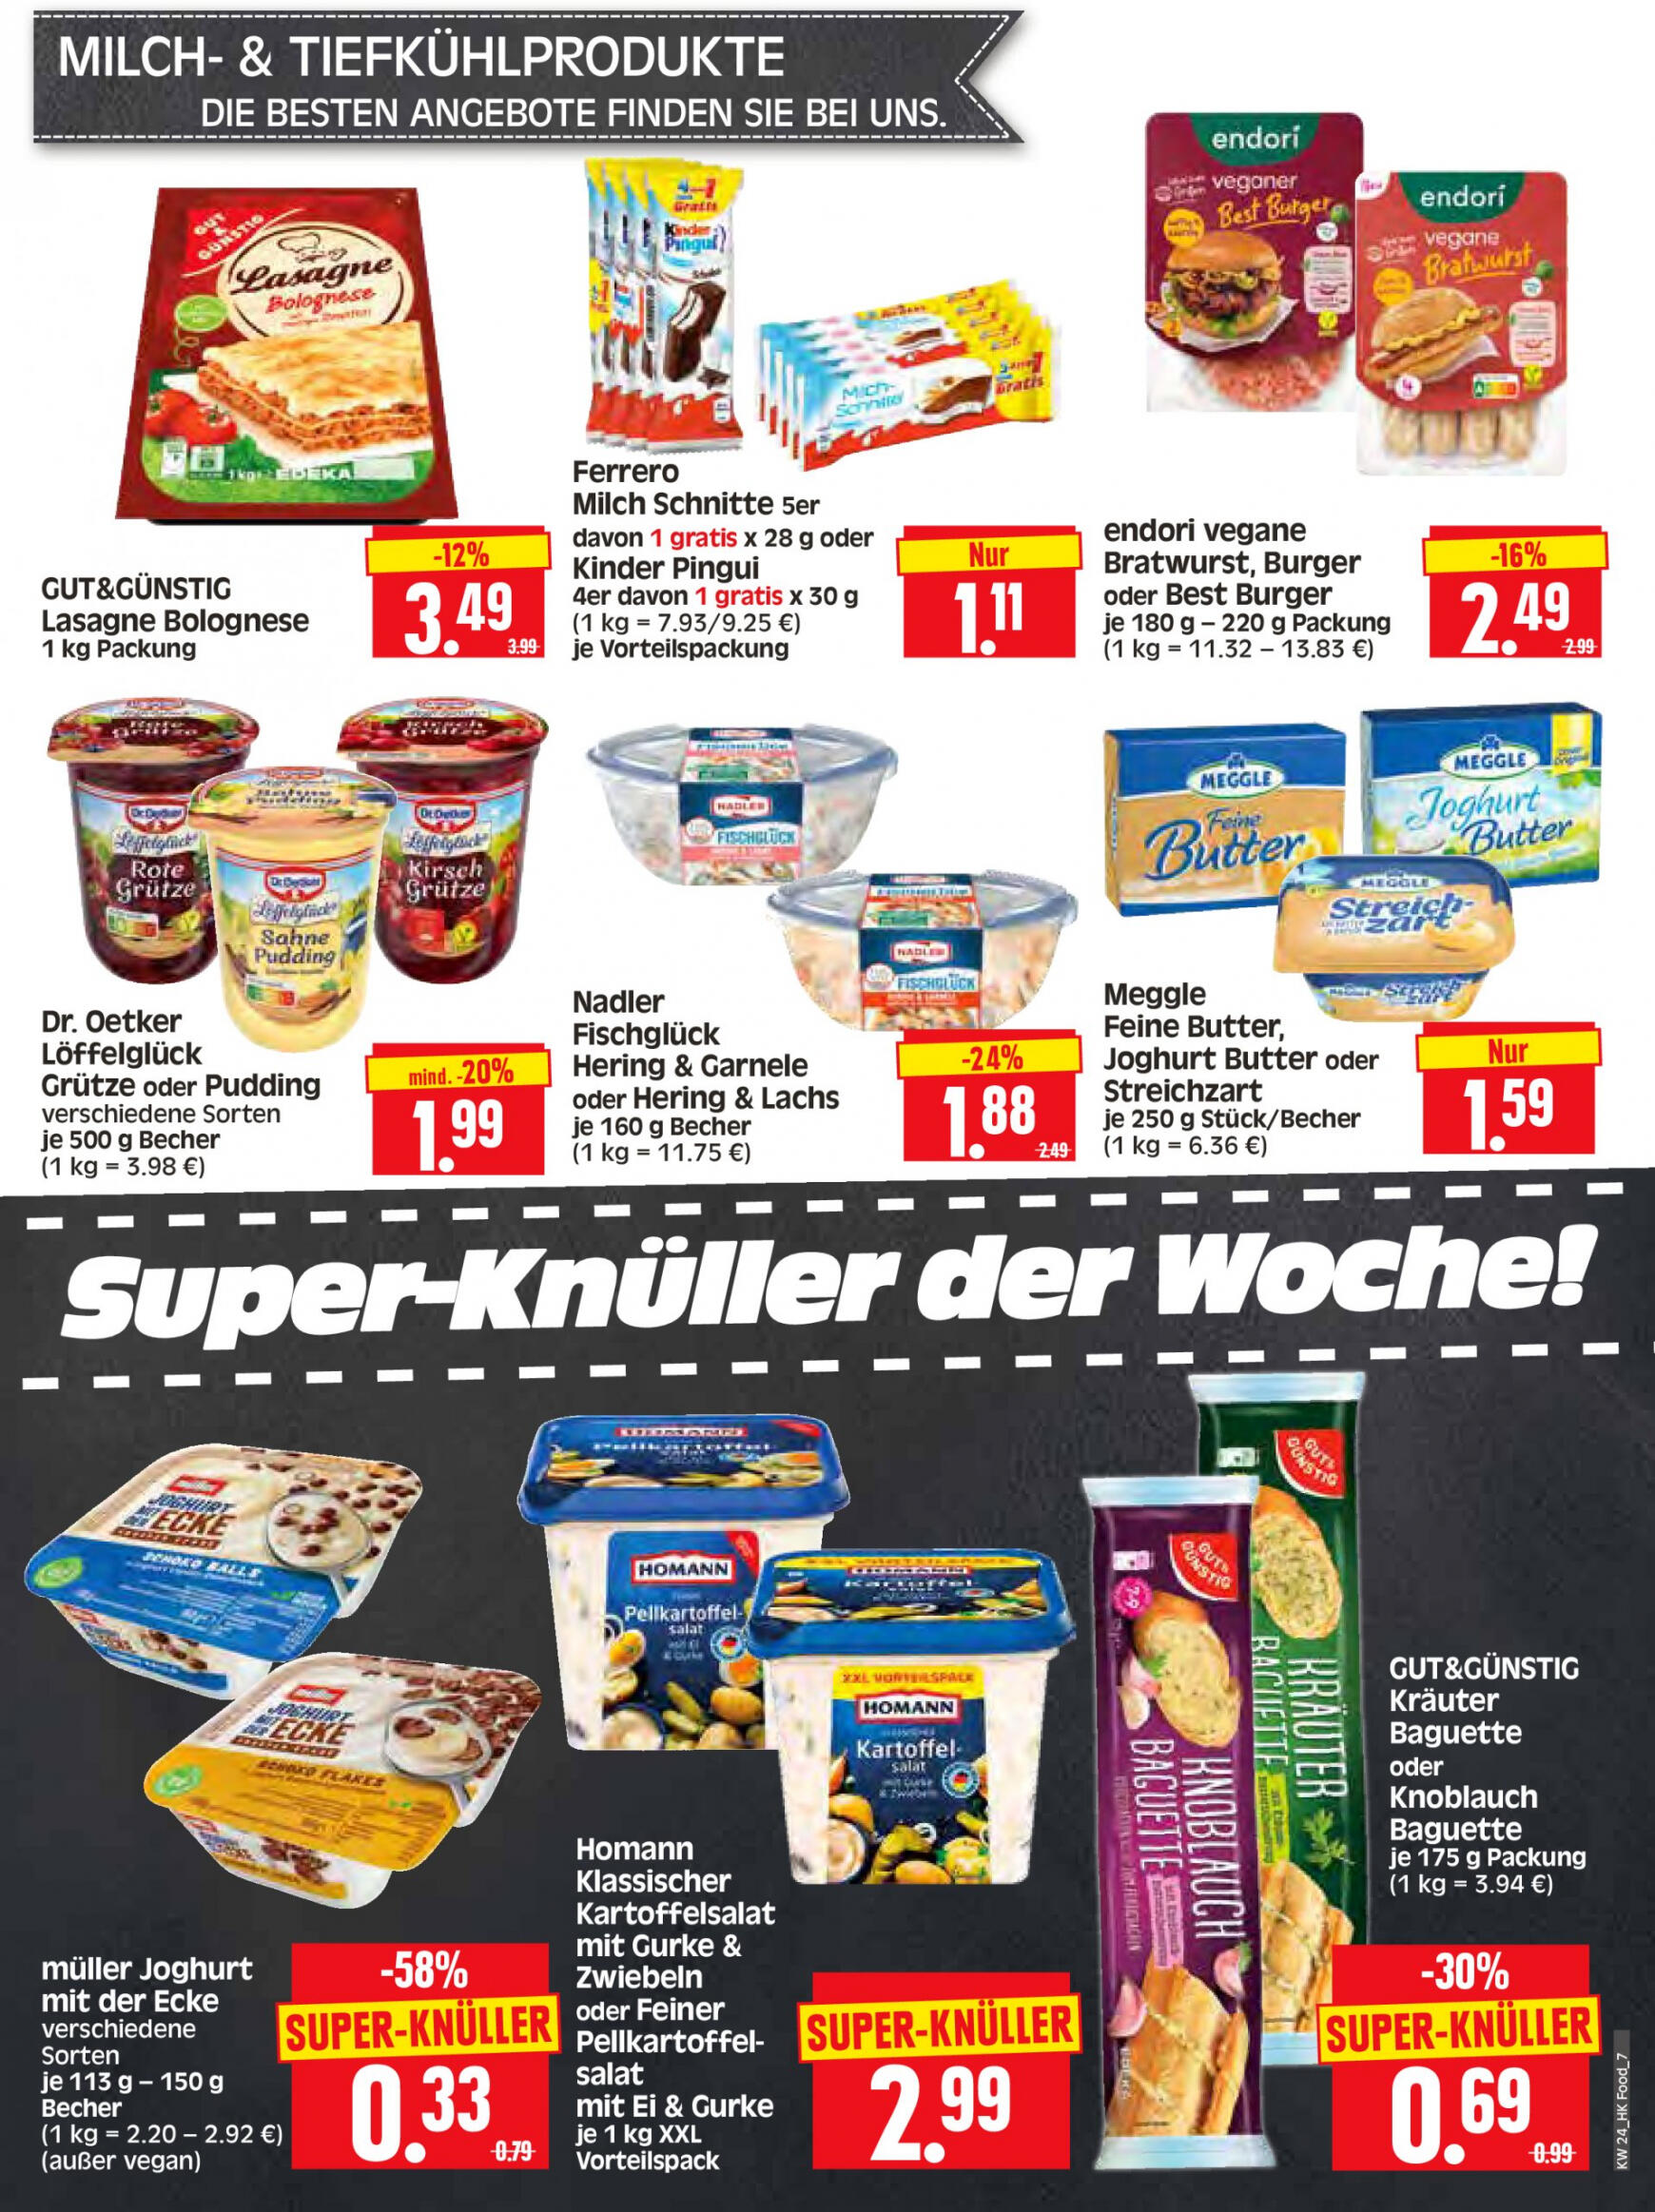 herkules - Flyer Herkules - Lebensmittel aktuell 10.06. - 15.06. - page: 7